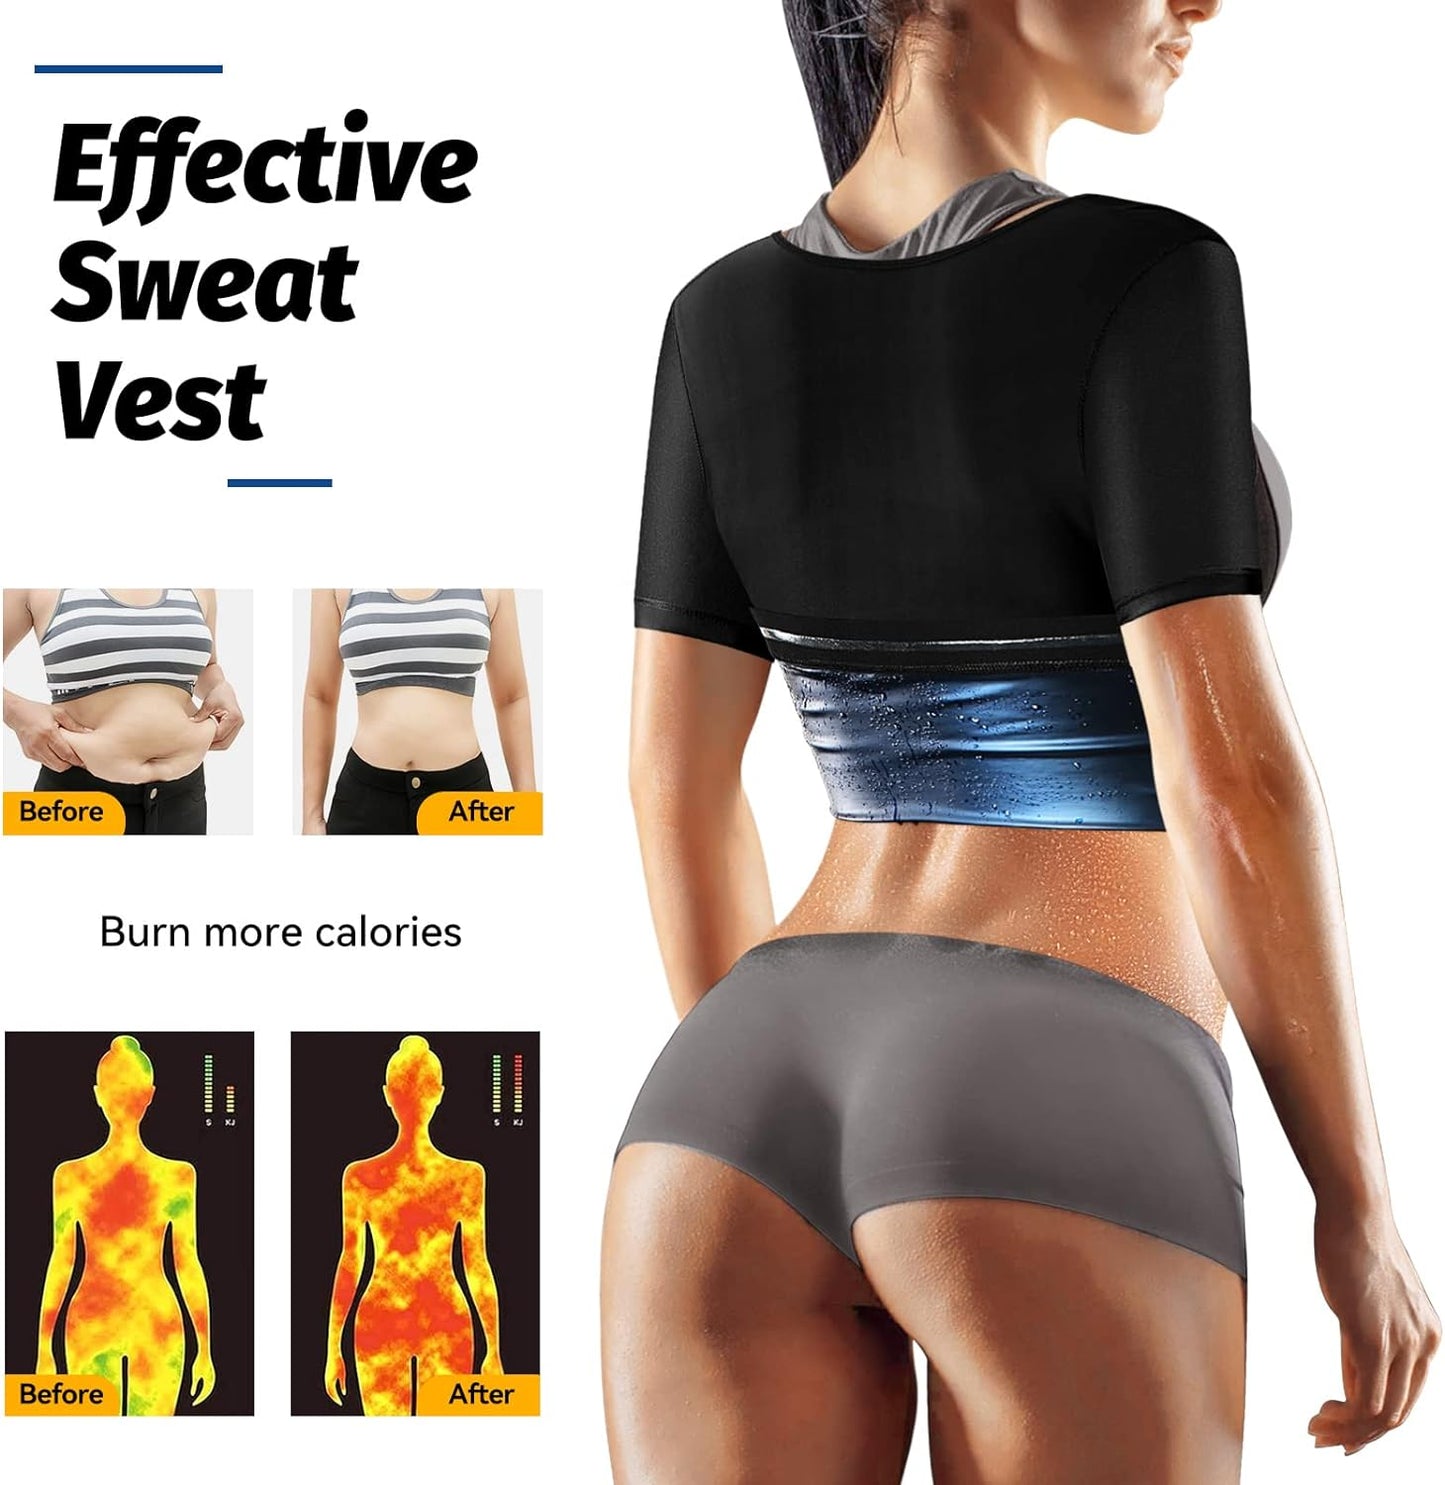 Sauna Suit for Women Weight Loss Sauna Shirt for Women Sweat Suit Waist Trainer Vest Fitness Body Shaper Zipper